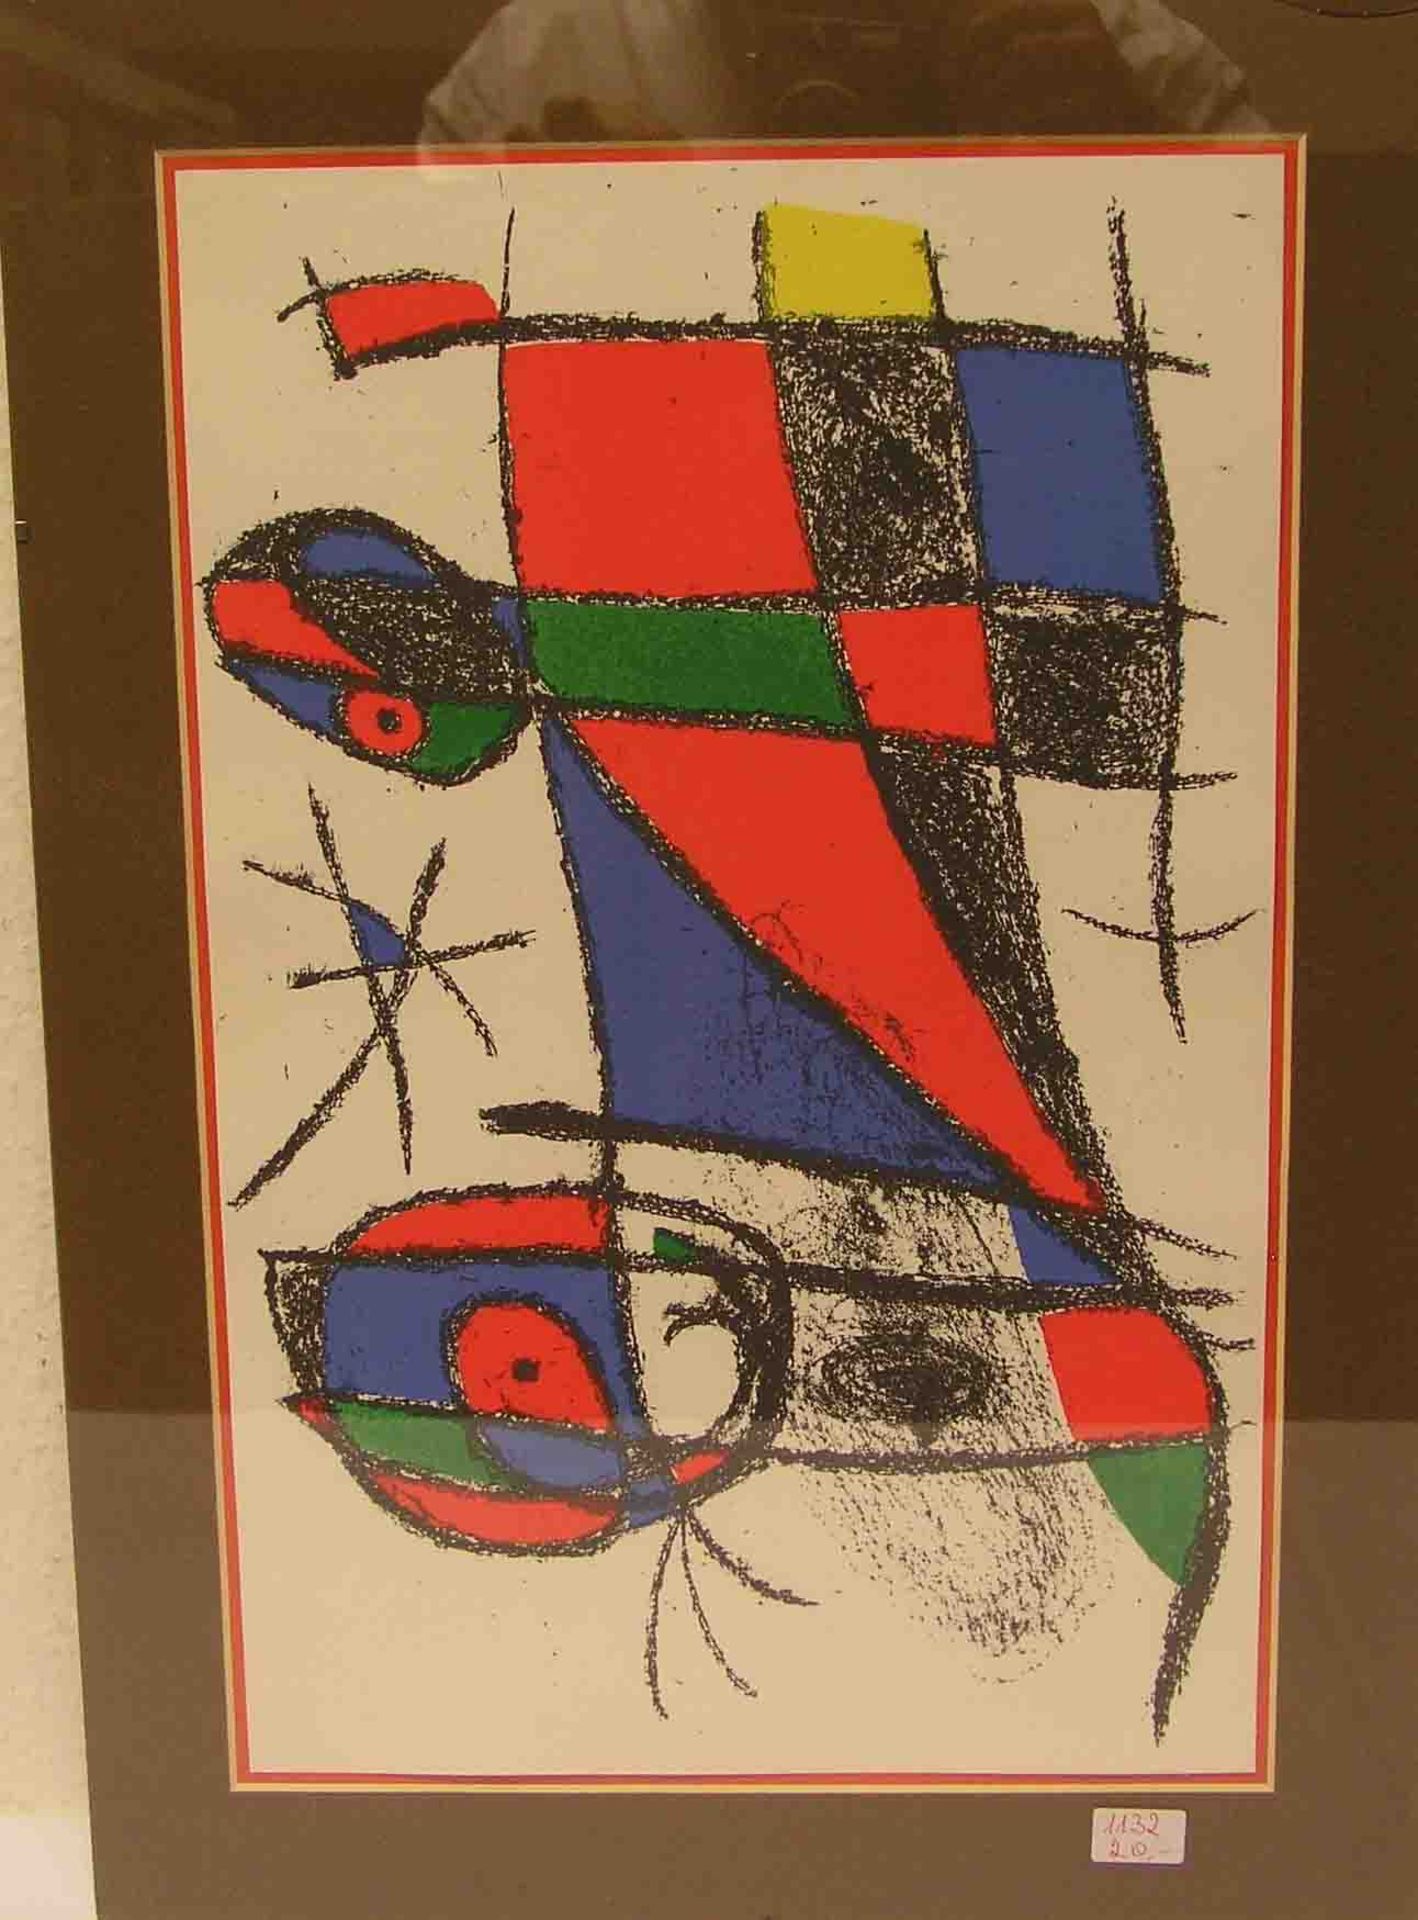 Miró (1893 - 1983): "Komposition". Farblithograpie, 49 x 31cm.